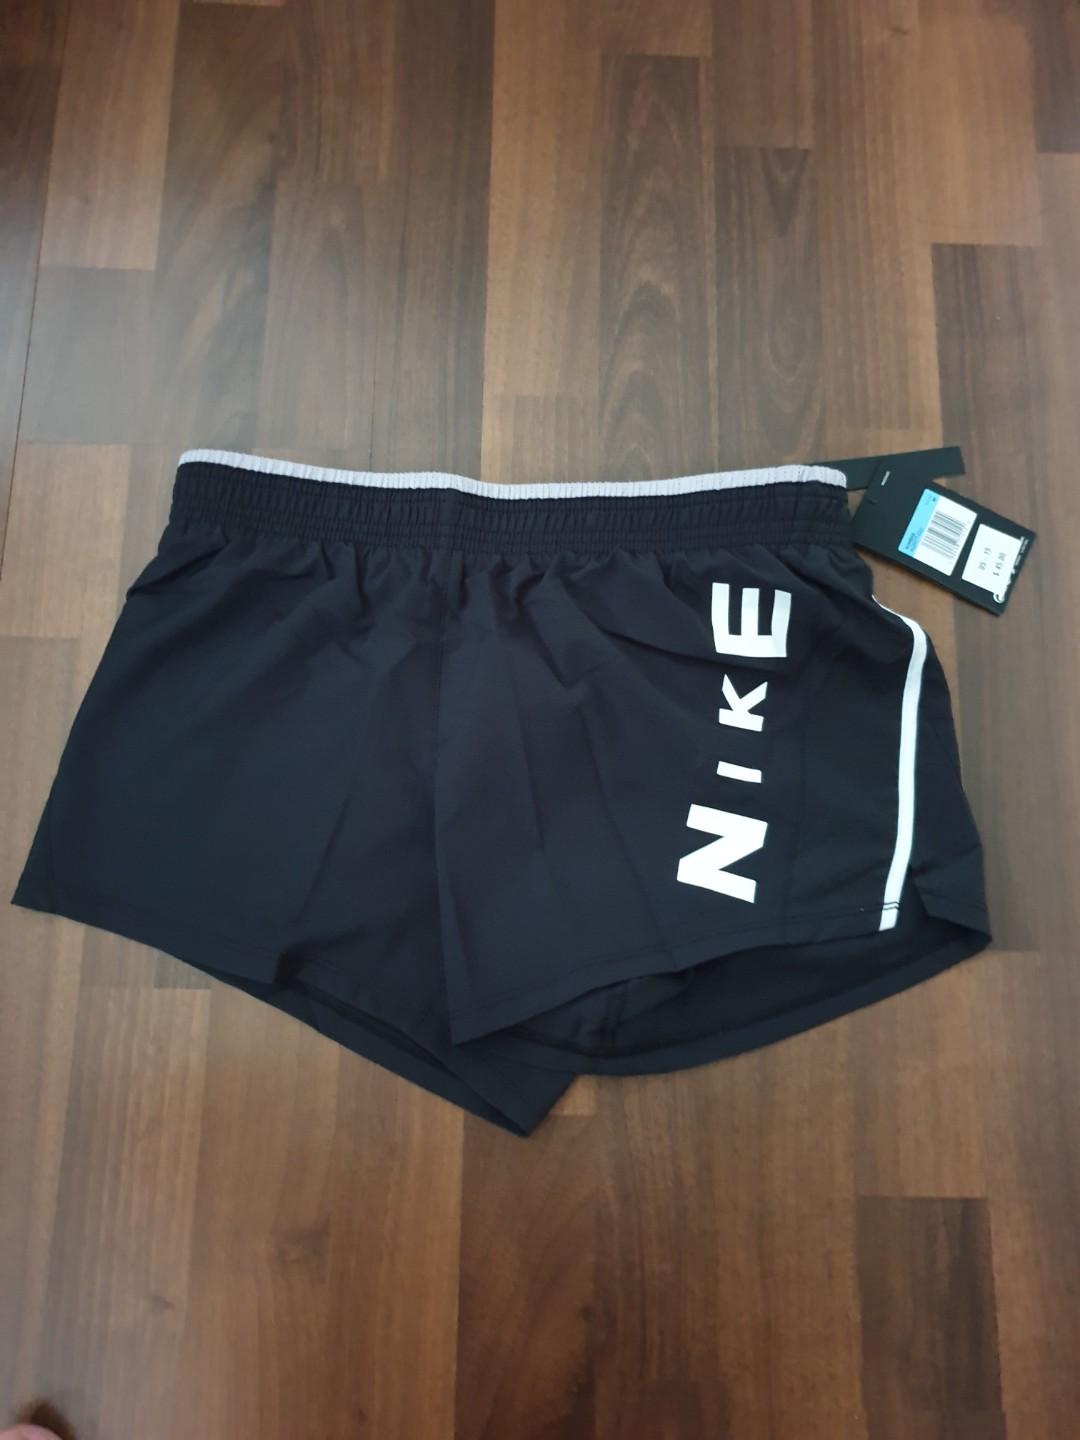 nike standard fit shorts